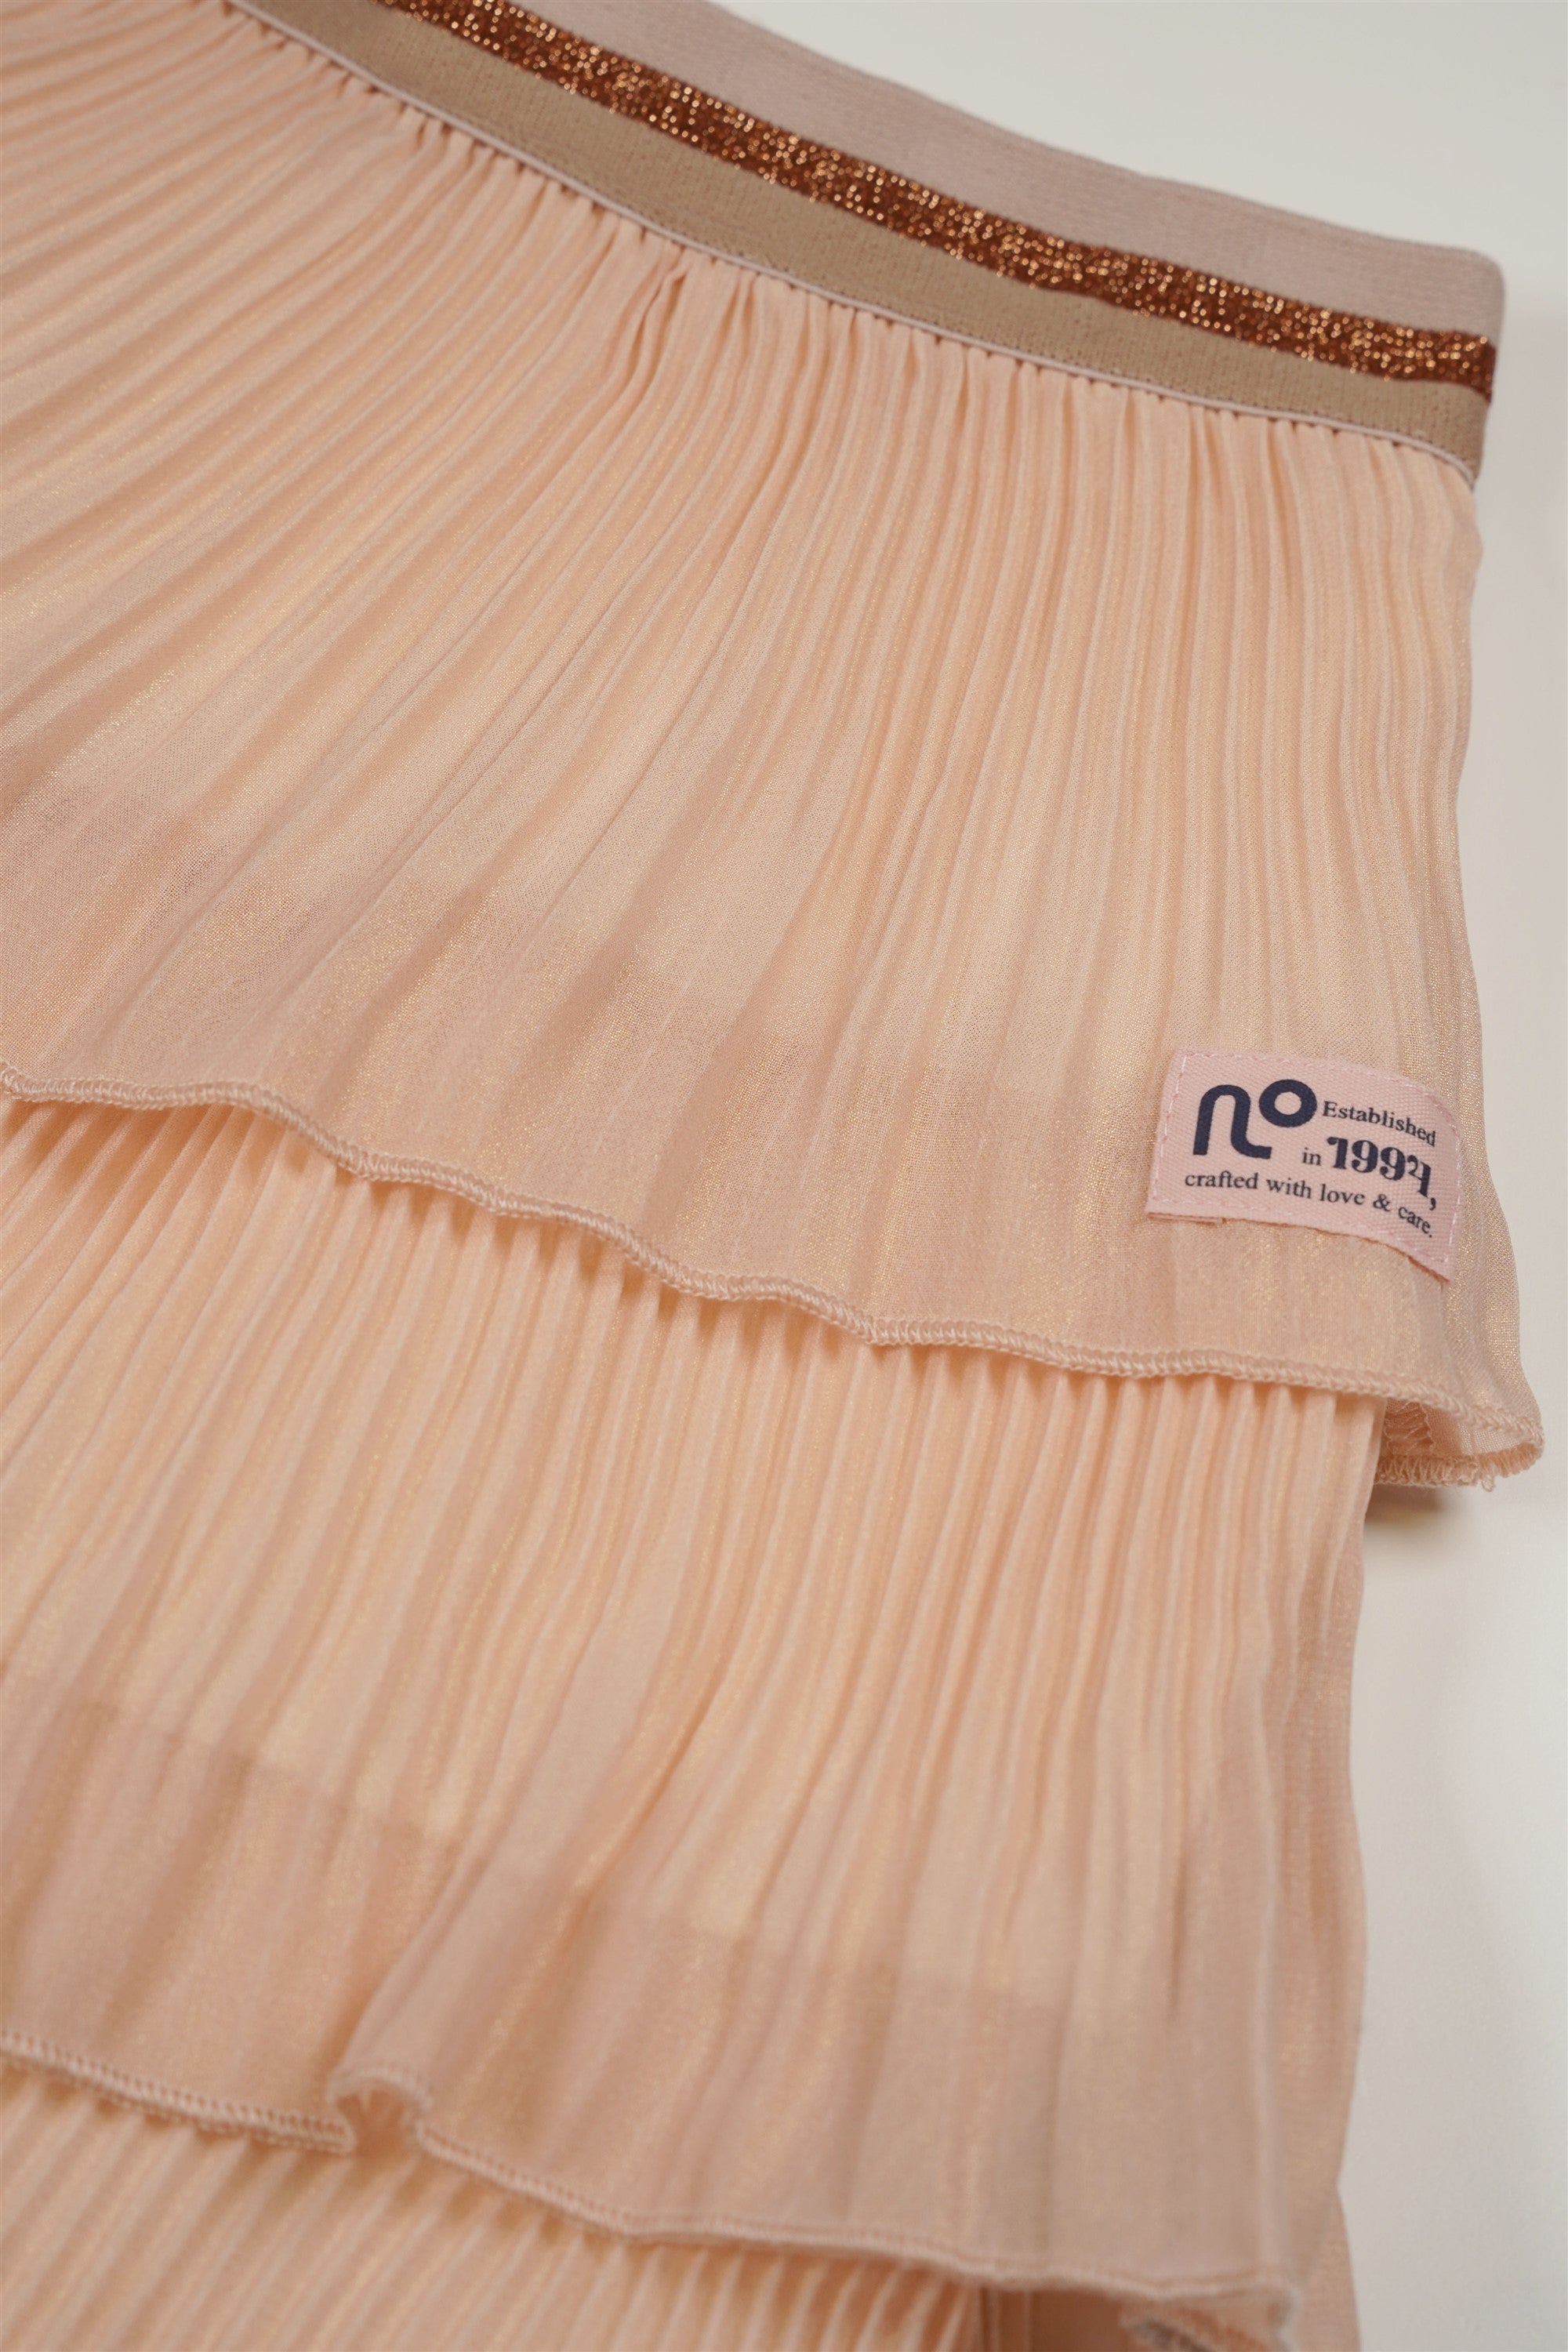 Meisjes Nika Girls Layered Plisse Skirt Light Gold+Jersey Pants Lining van NoNo in de kleur Light Gold in maat 134-140.